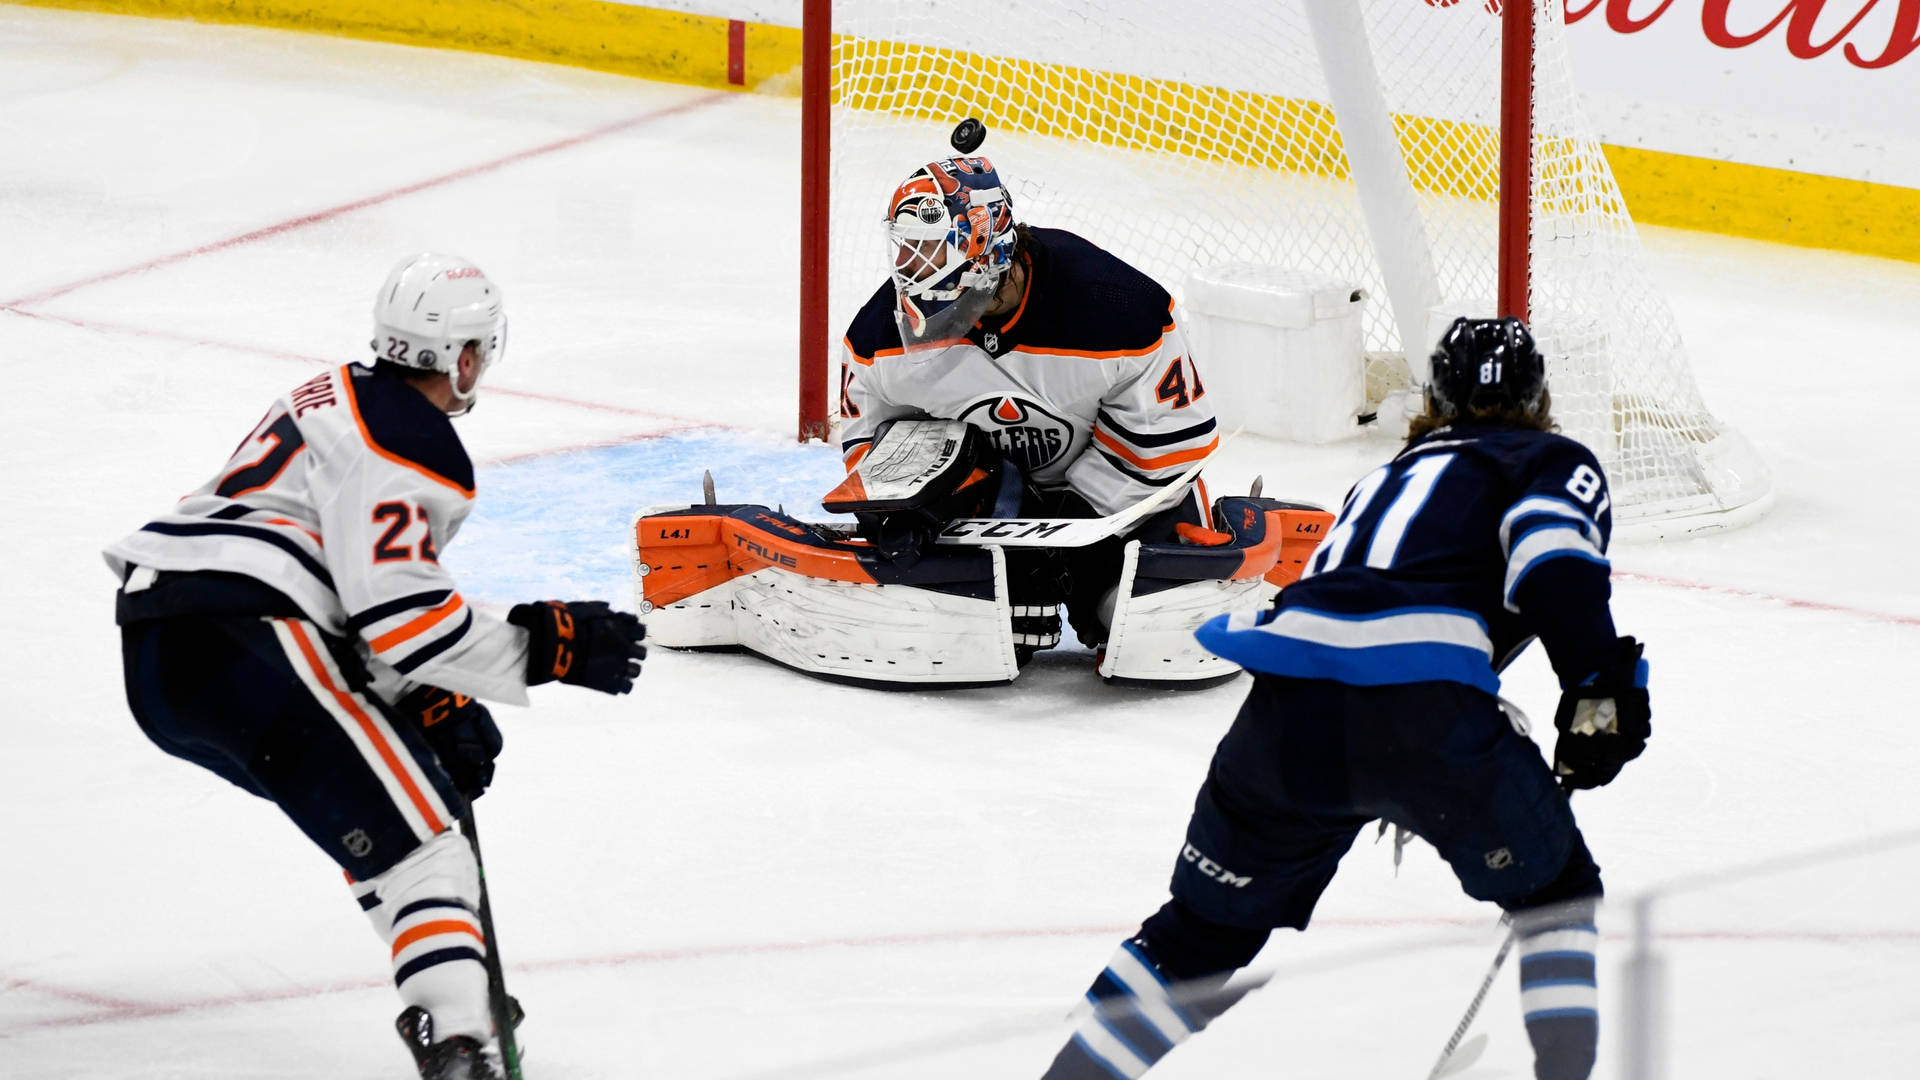 Amerikansk ishockey-spiller Kyle Connor mod Edmonton Oilers målmand Mikko Koskinen Wallpaper